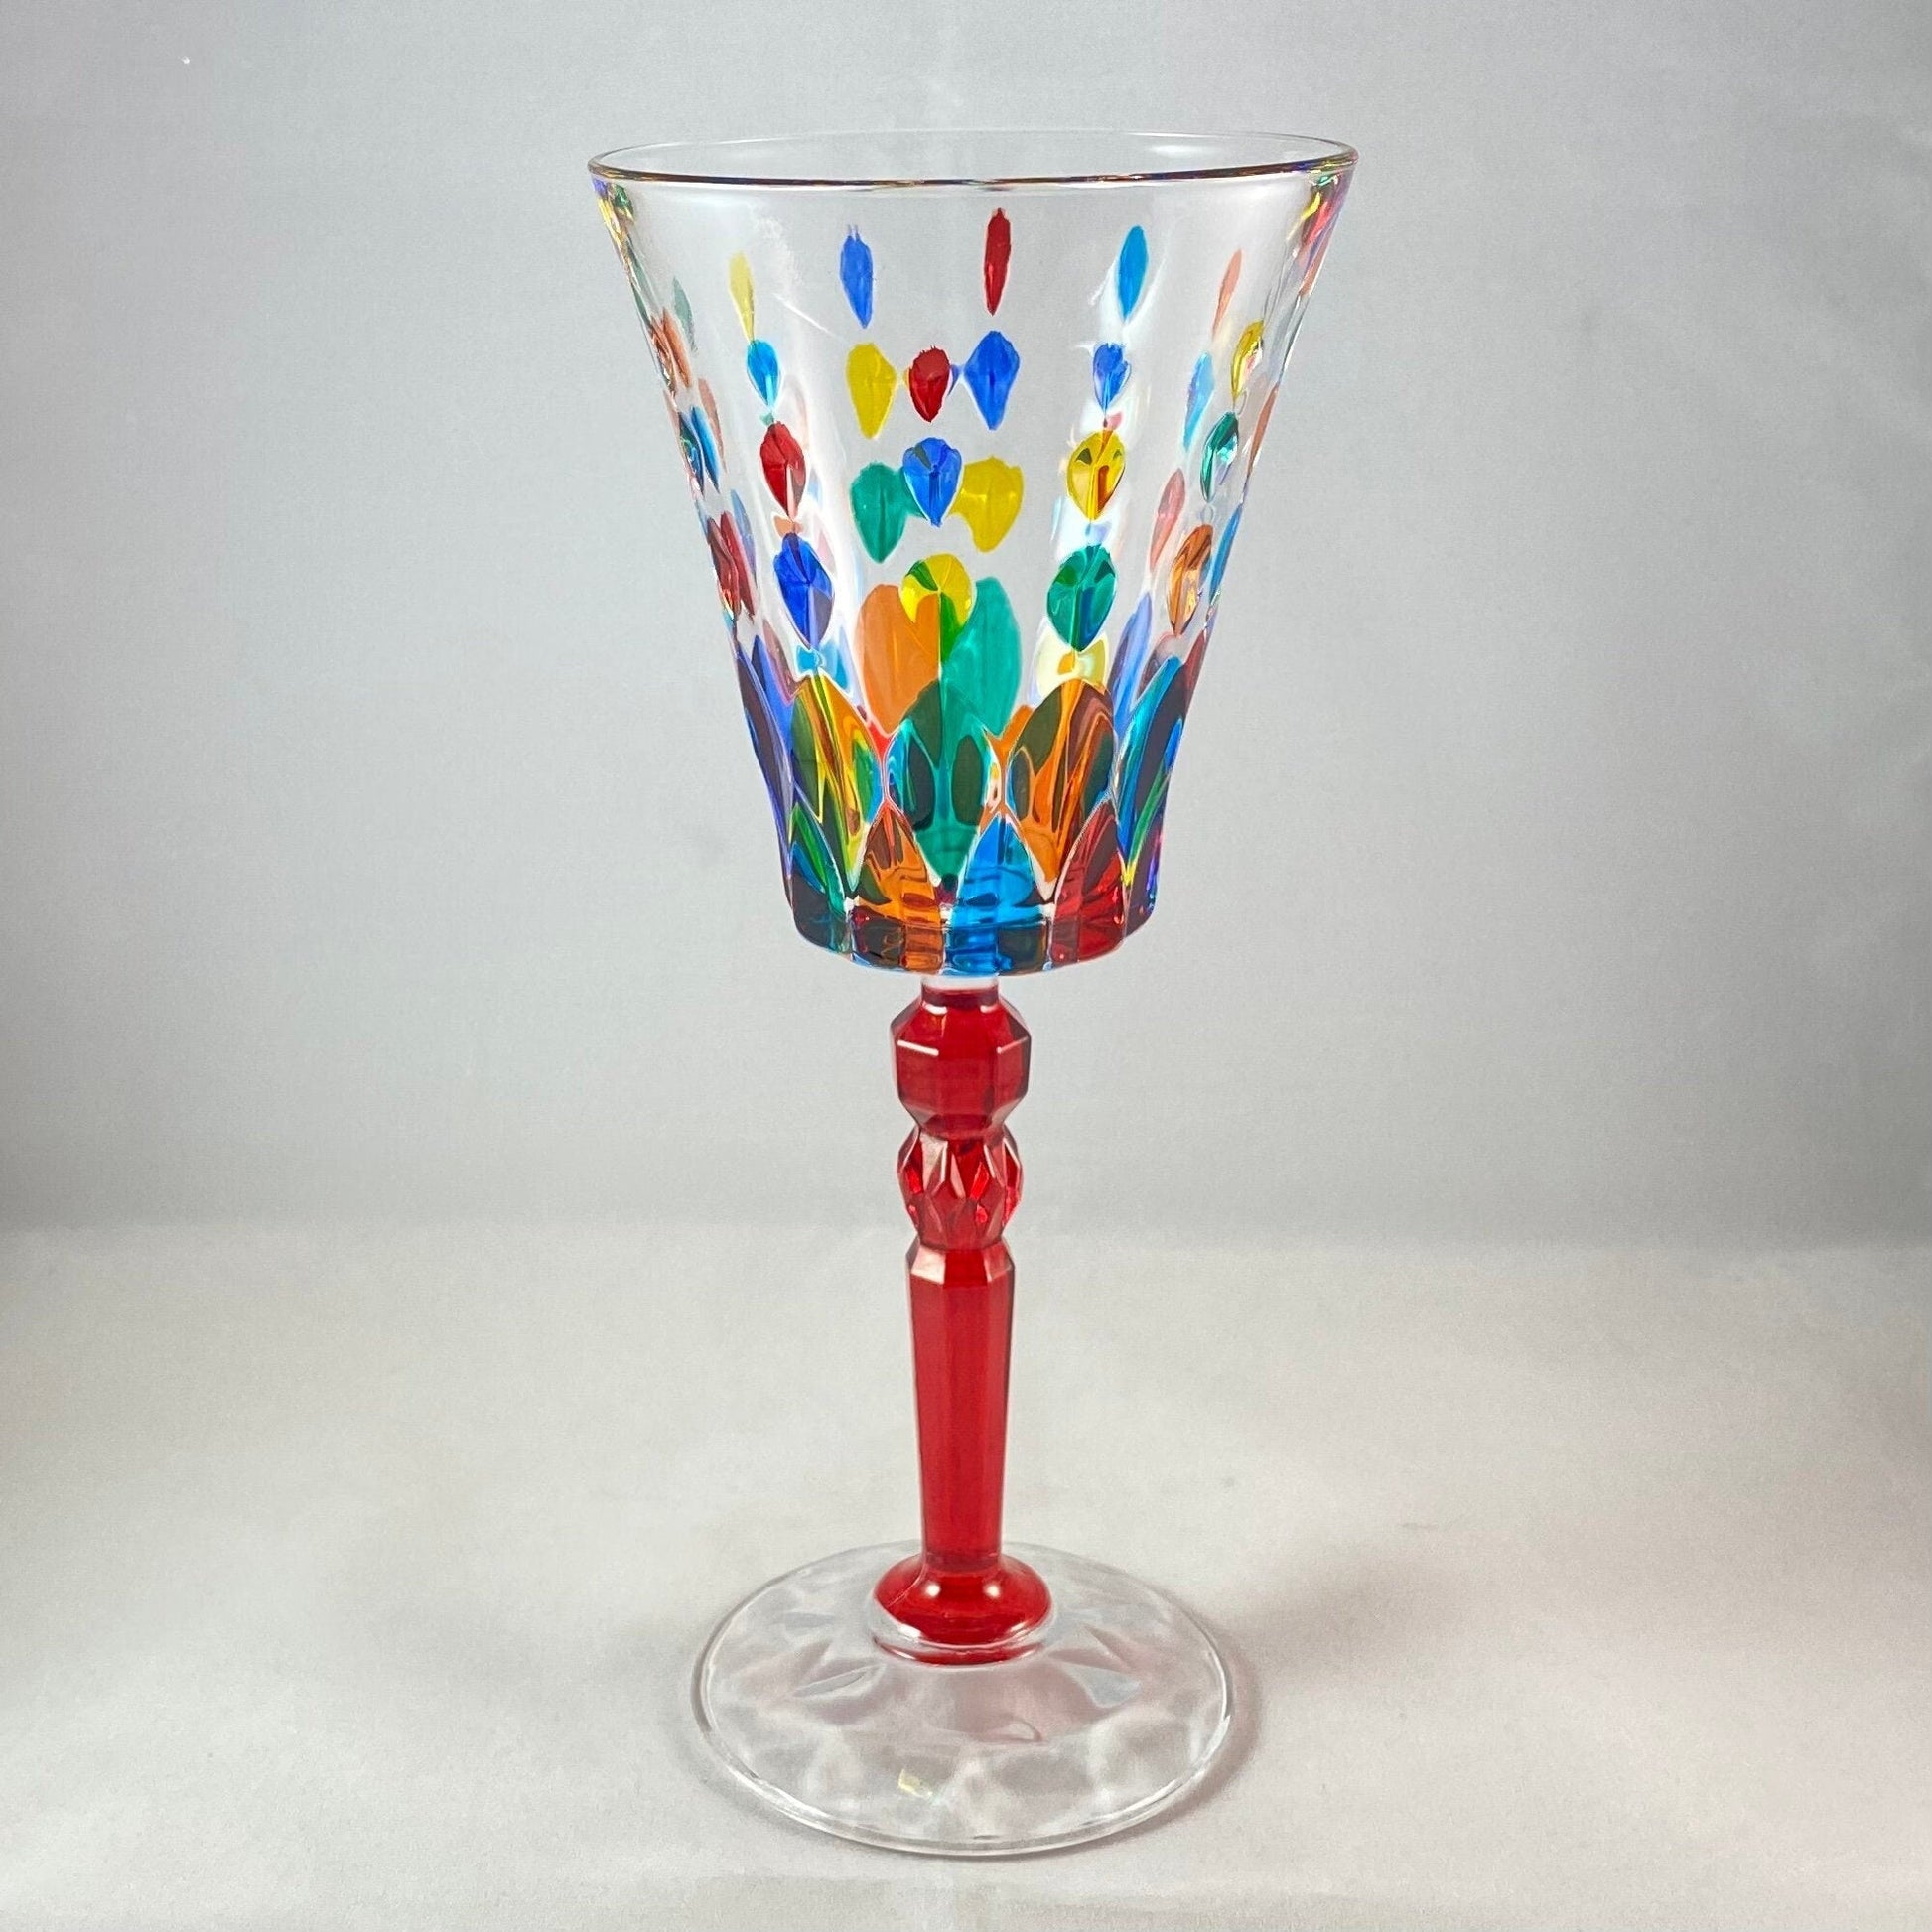 Red Stem Marilyn Venetian Glass Wine Glass - Handmade in Italy, Colorful Murano Glass